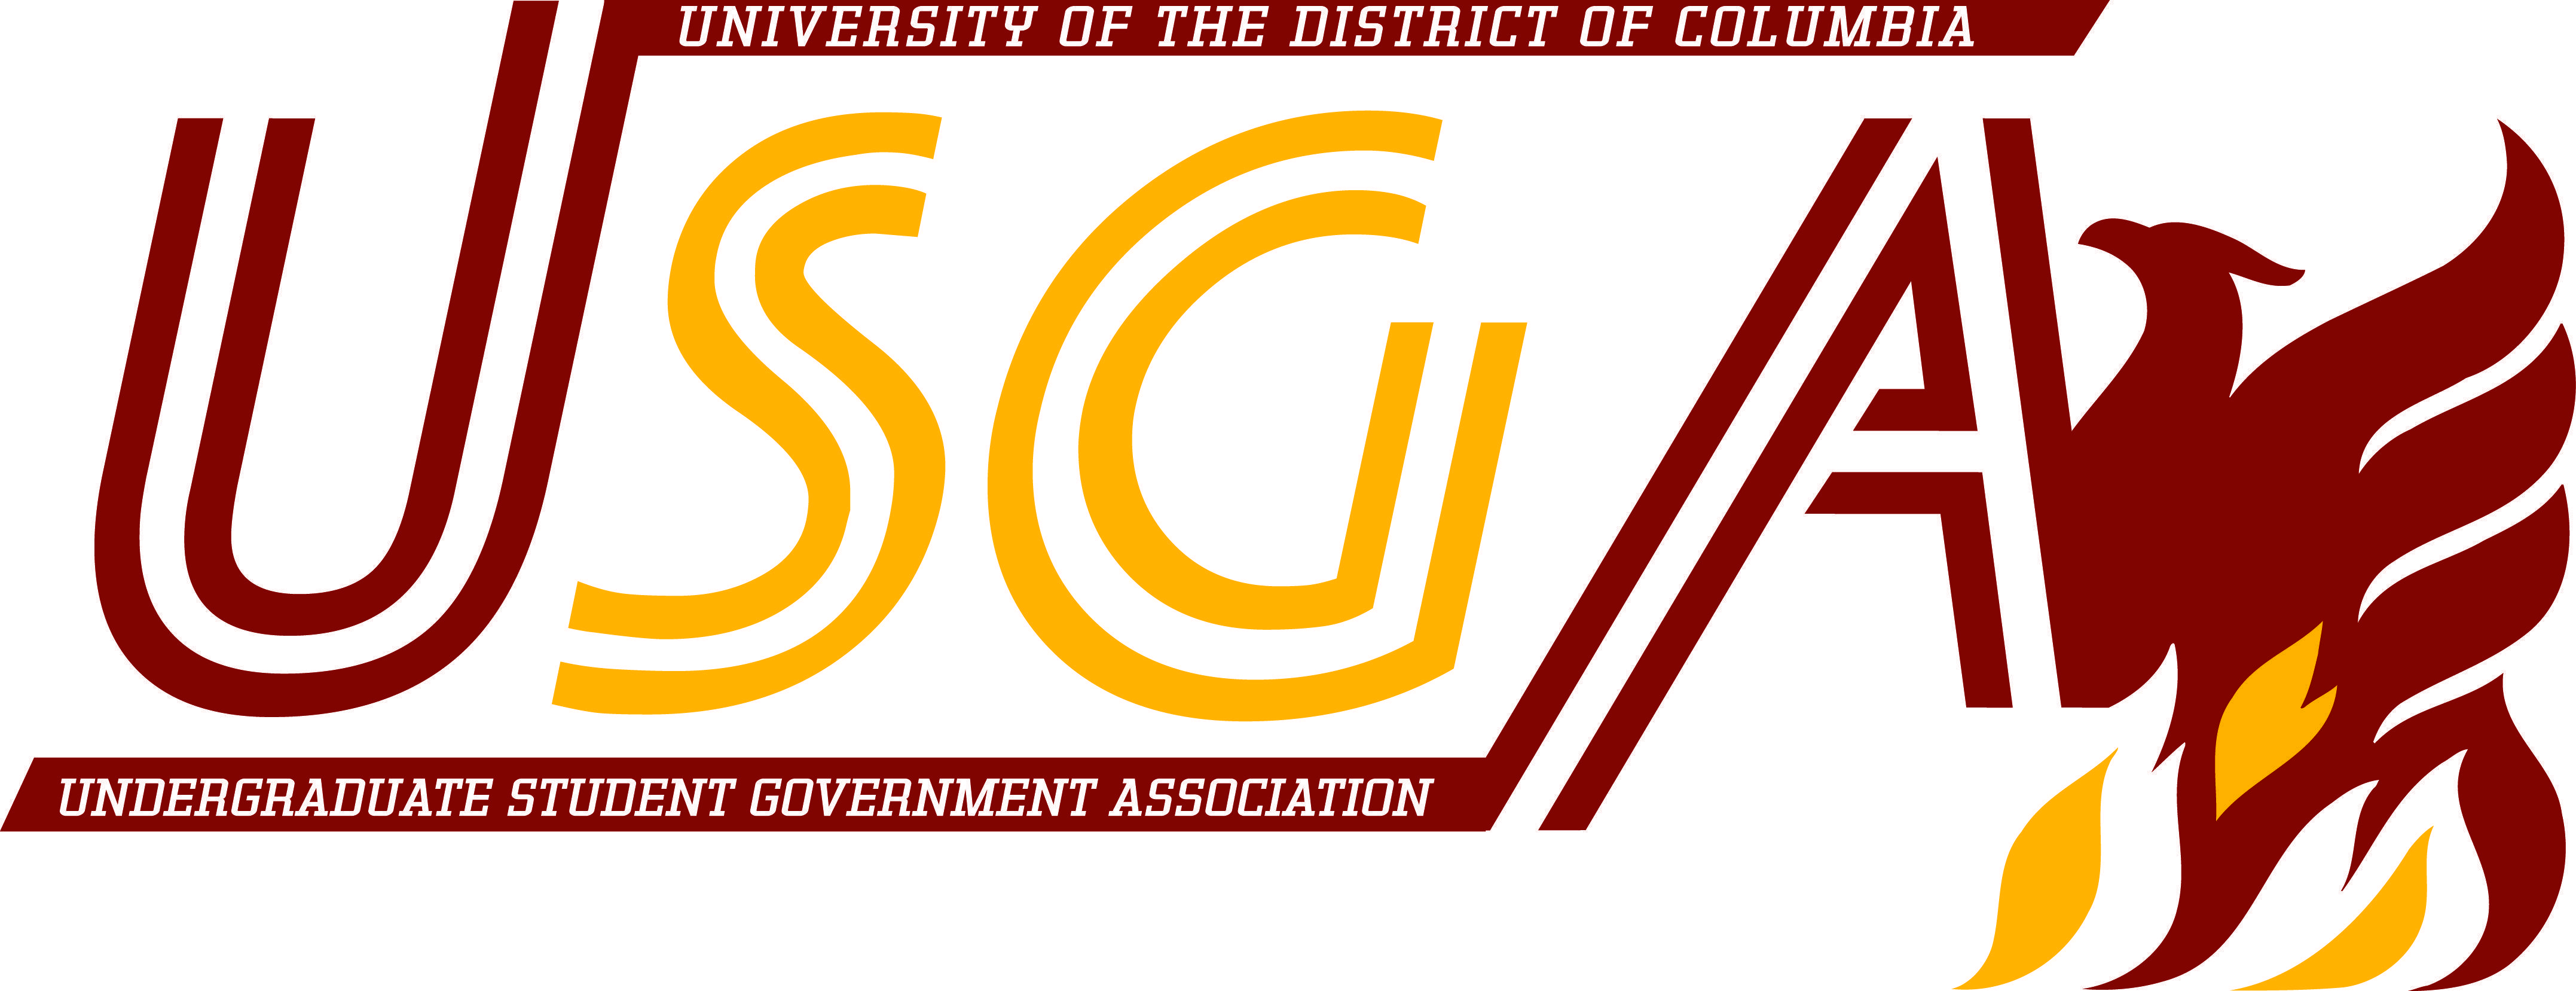 USGA Logo - USGA Logo | University of the District of Columbia